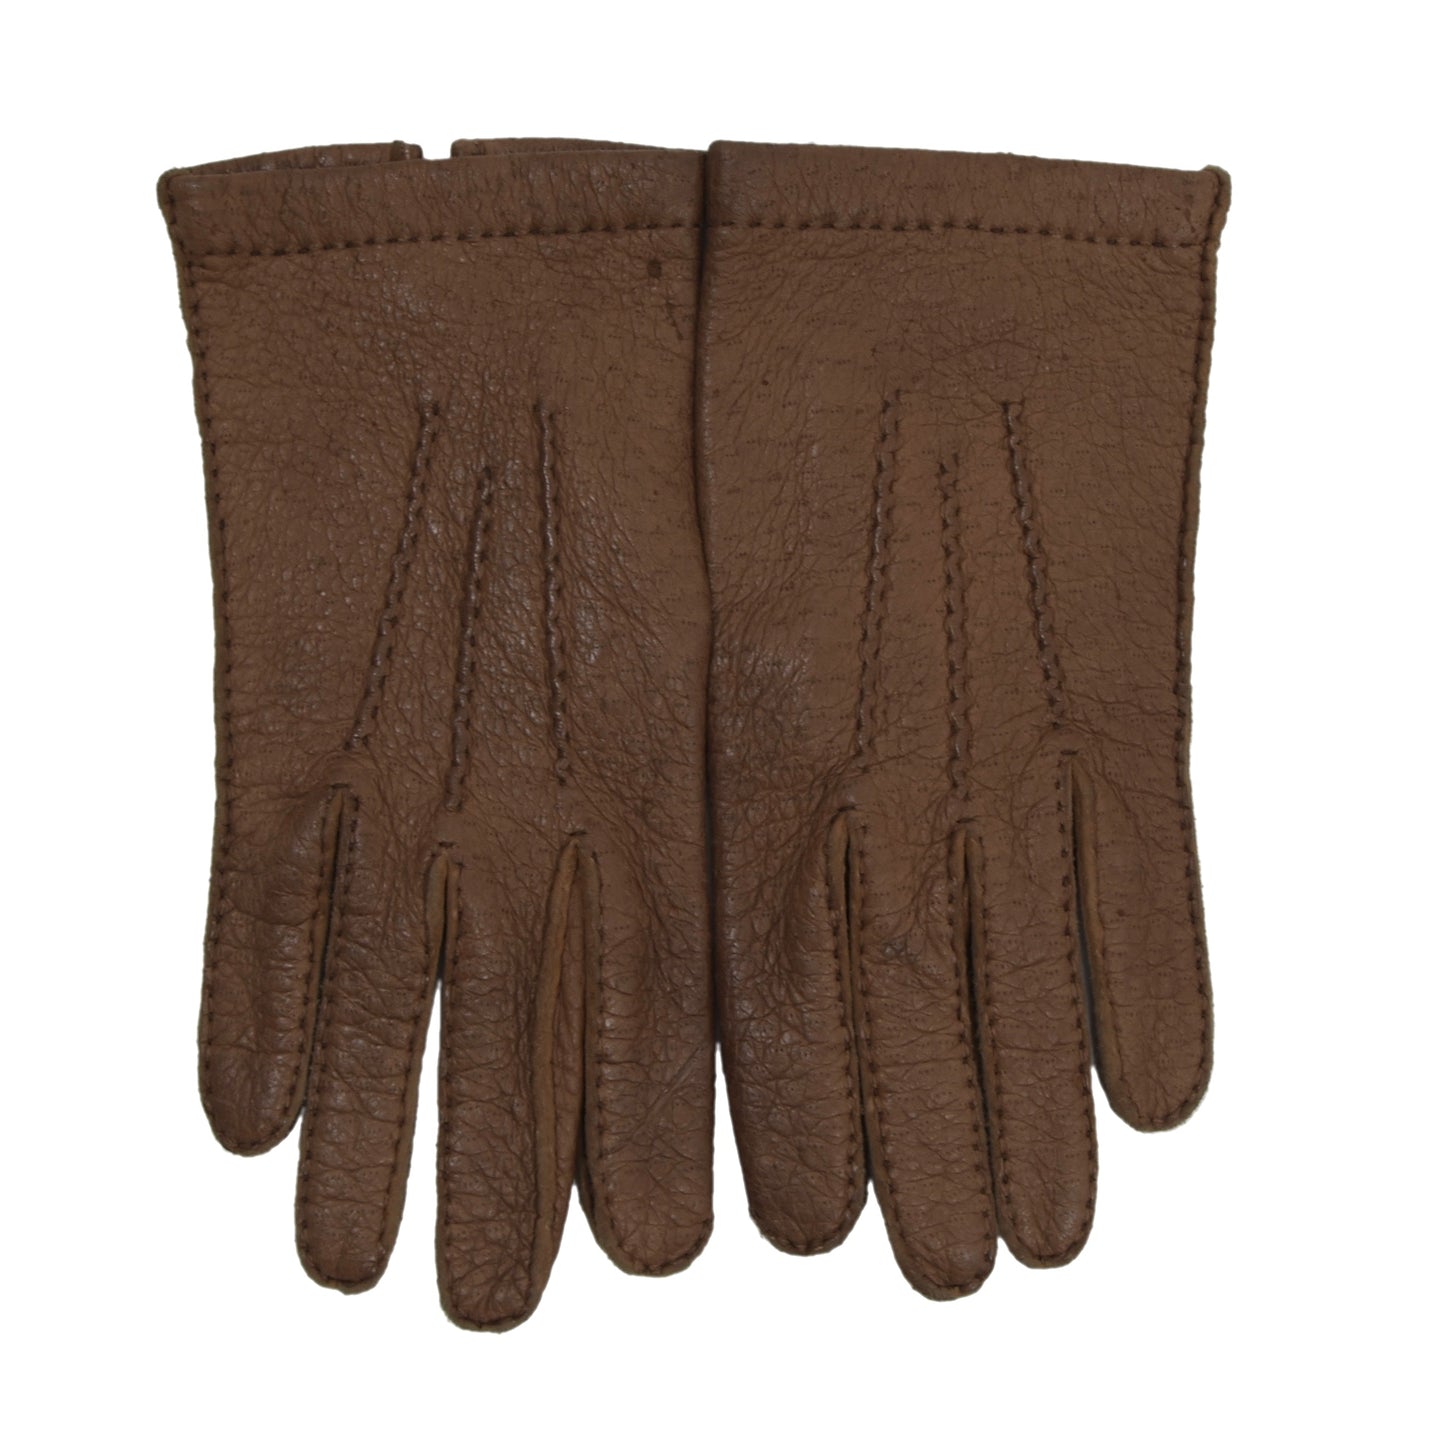 Ungefütterte Peccary-Handschuhe Größe 8 3/4 - Hellbraun/Braun